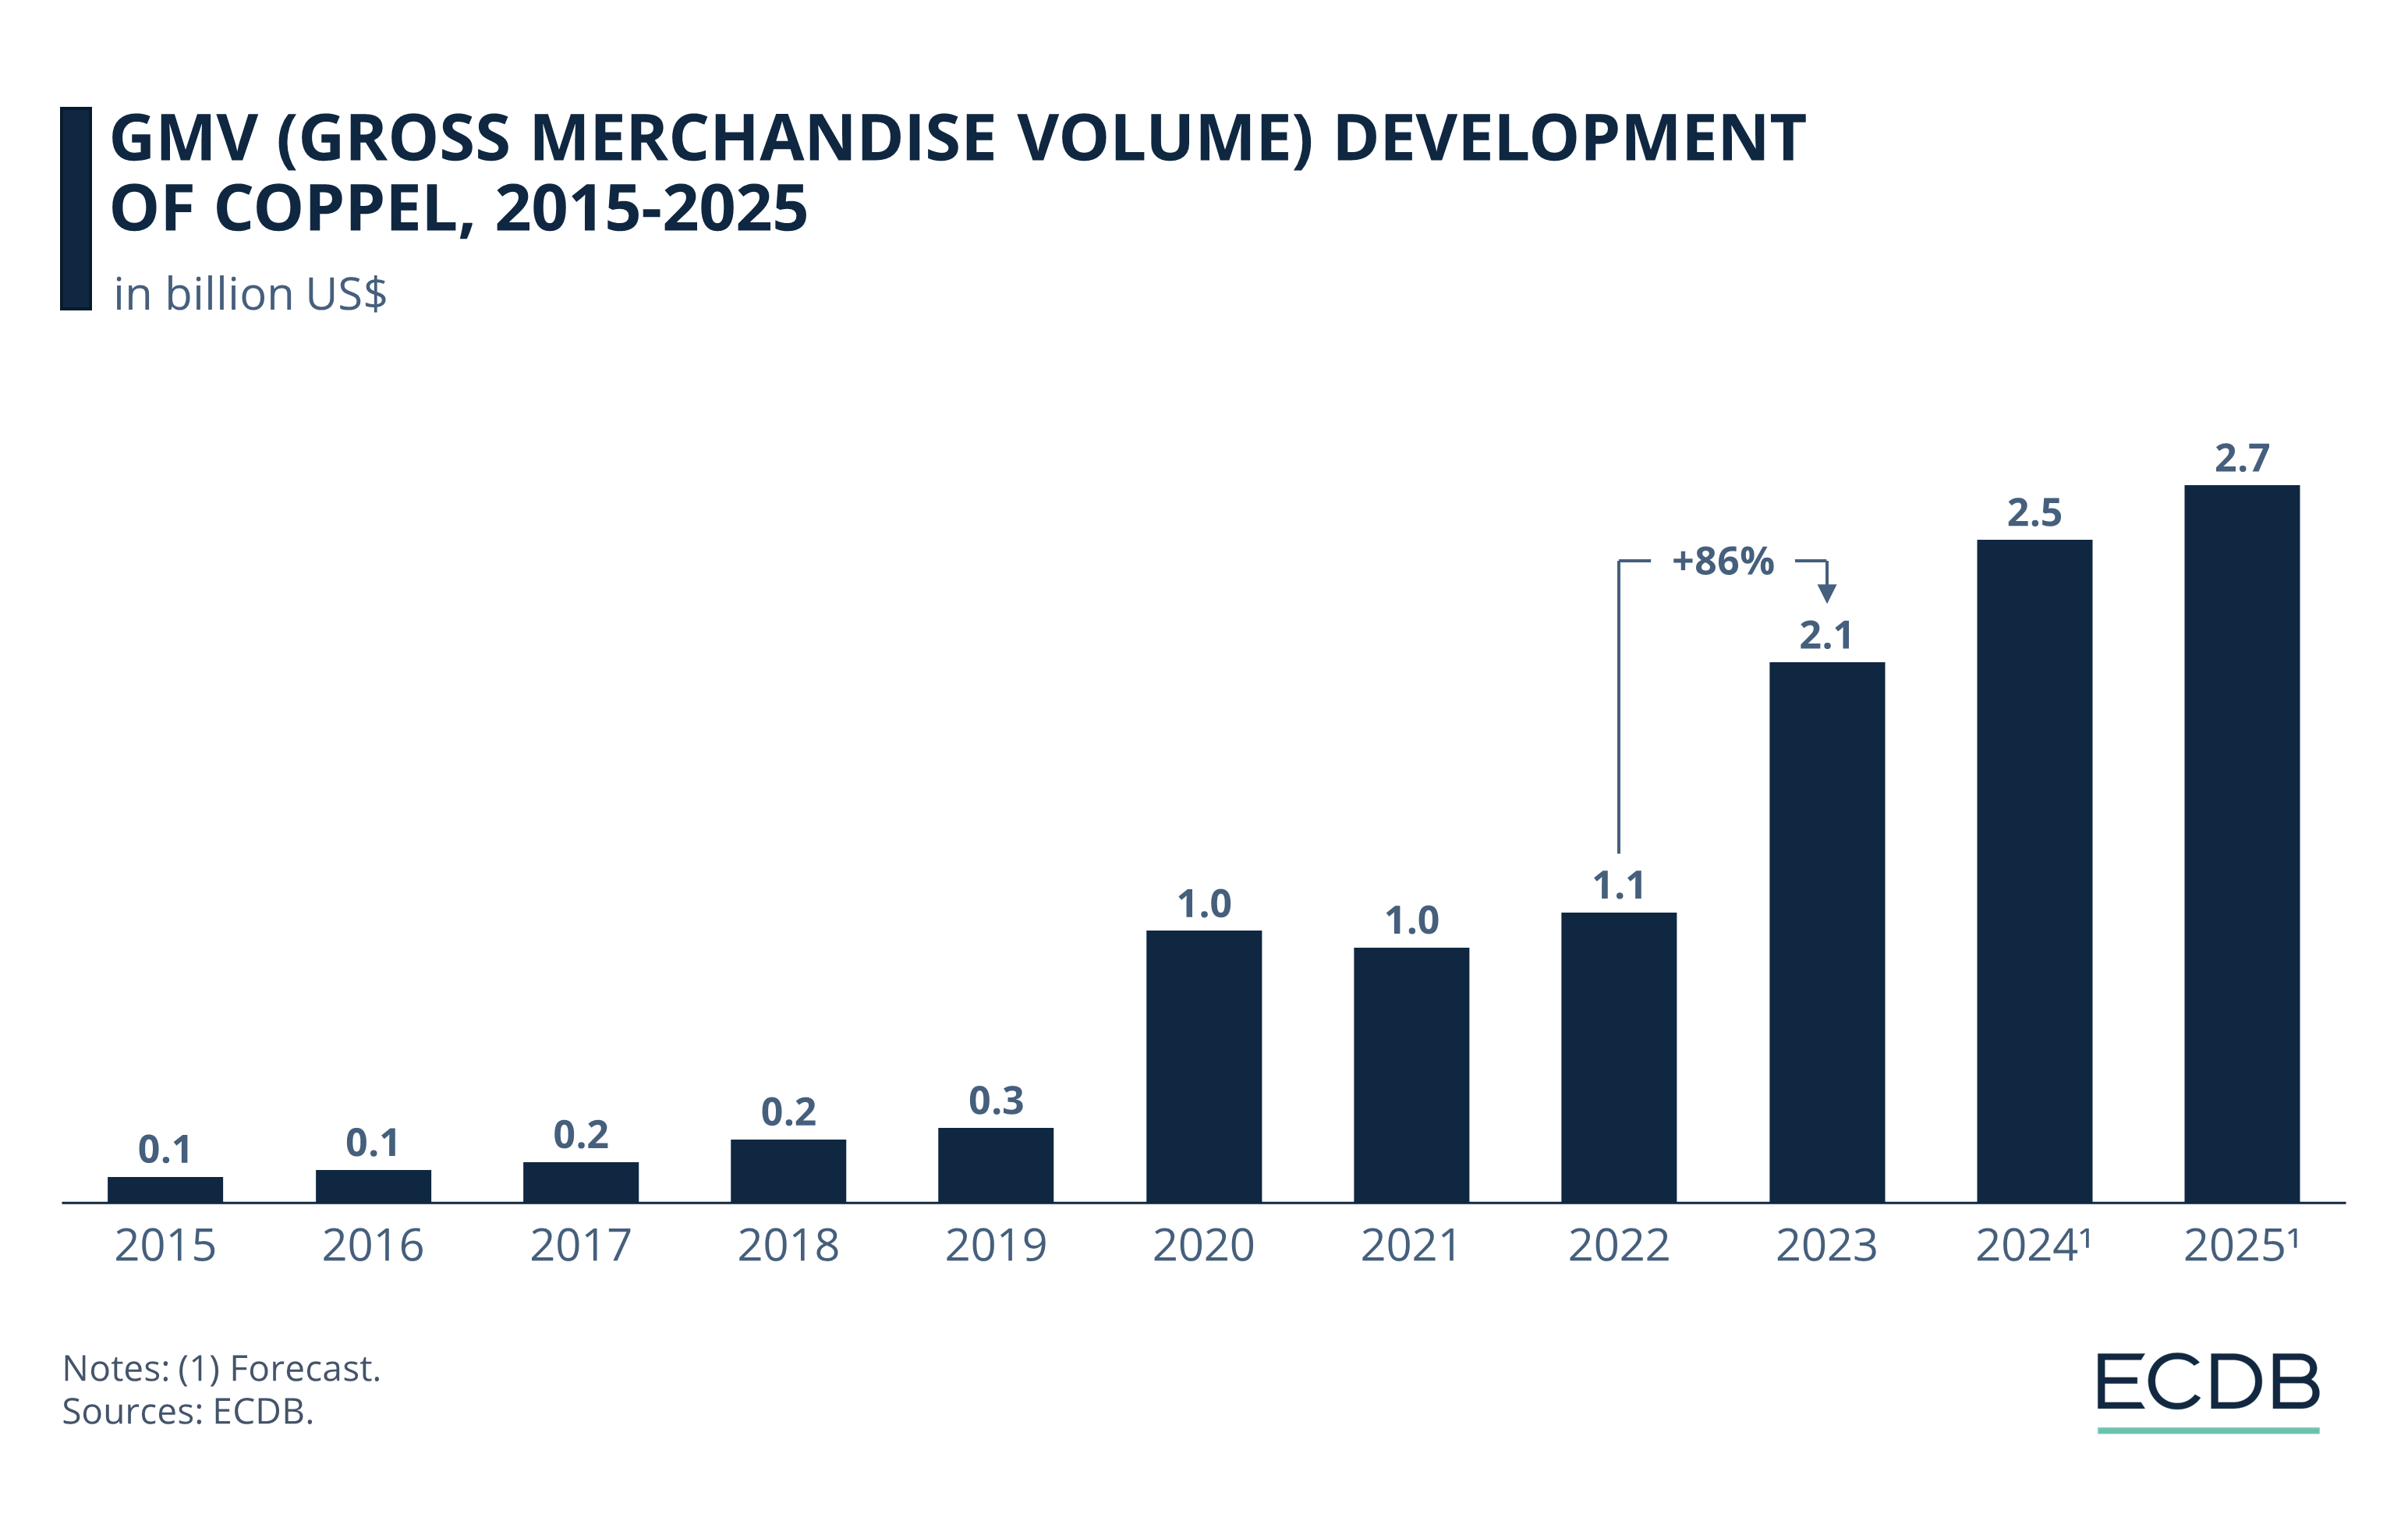 GMV (Gross Merchandise Volume) Development of Coppel, 2015-2025